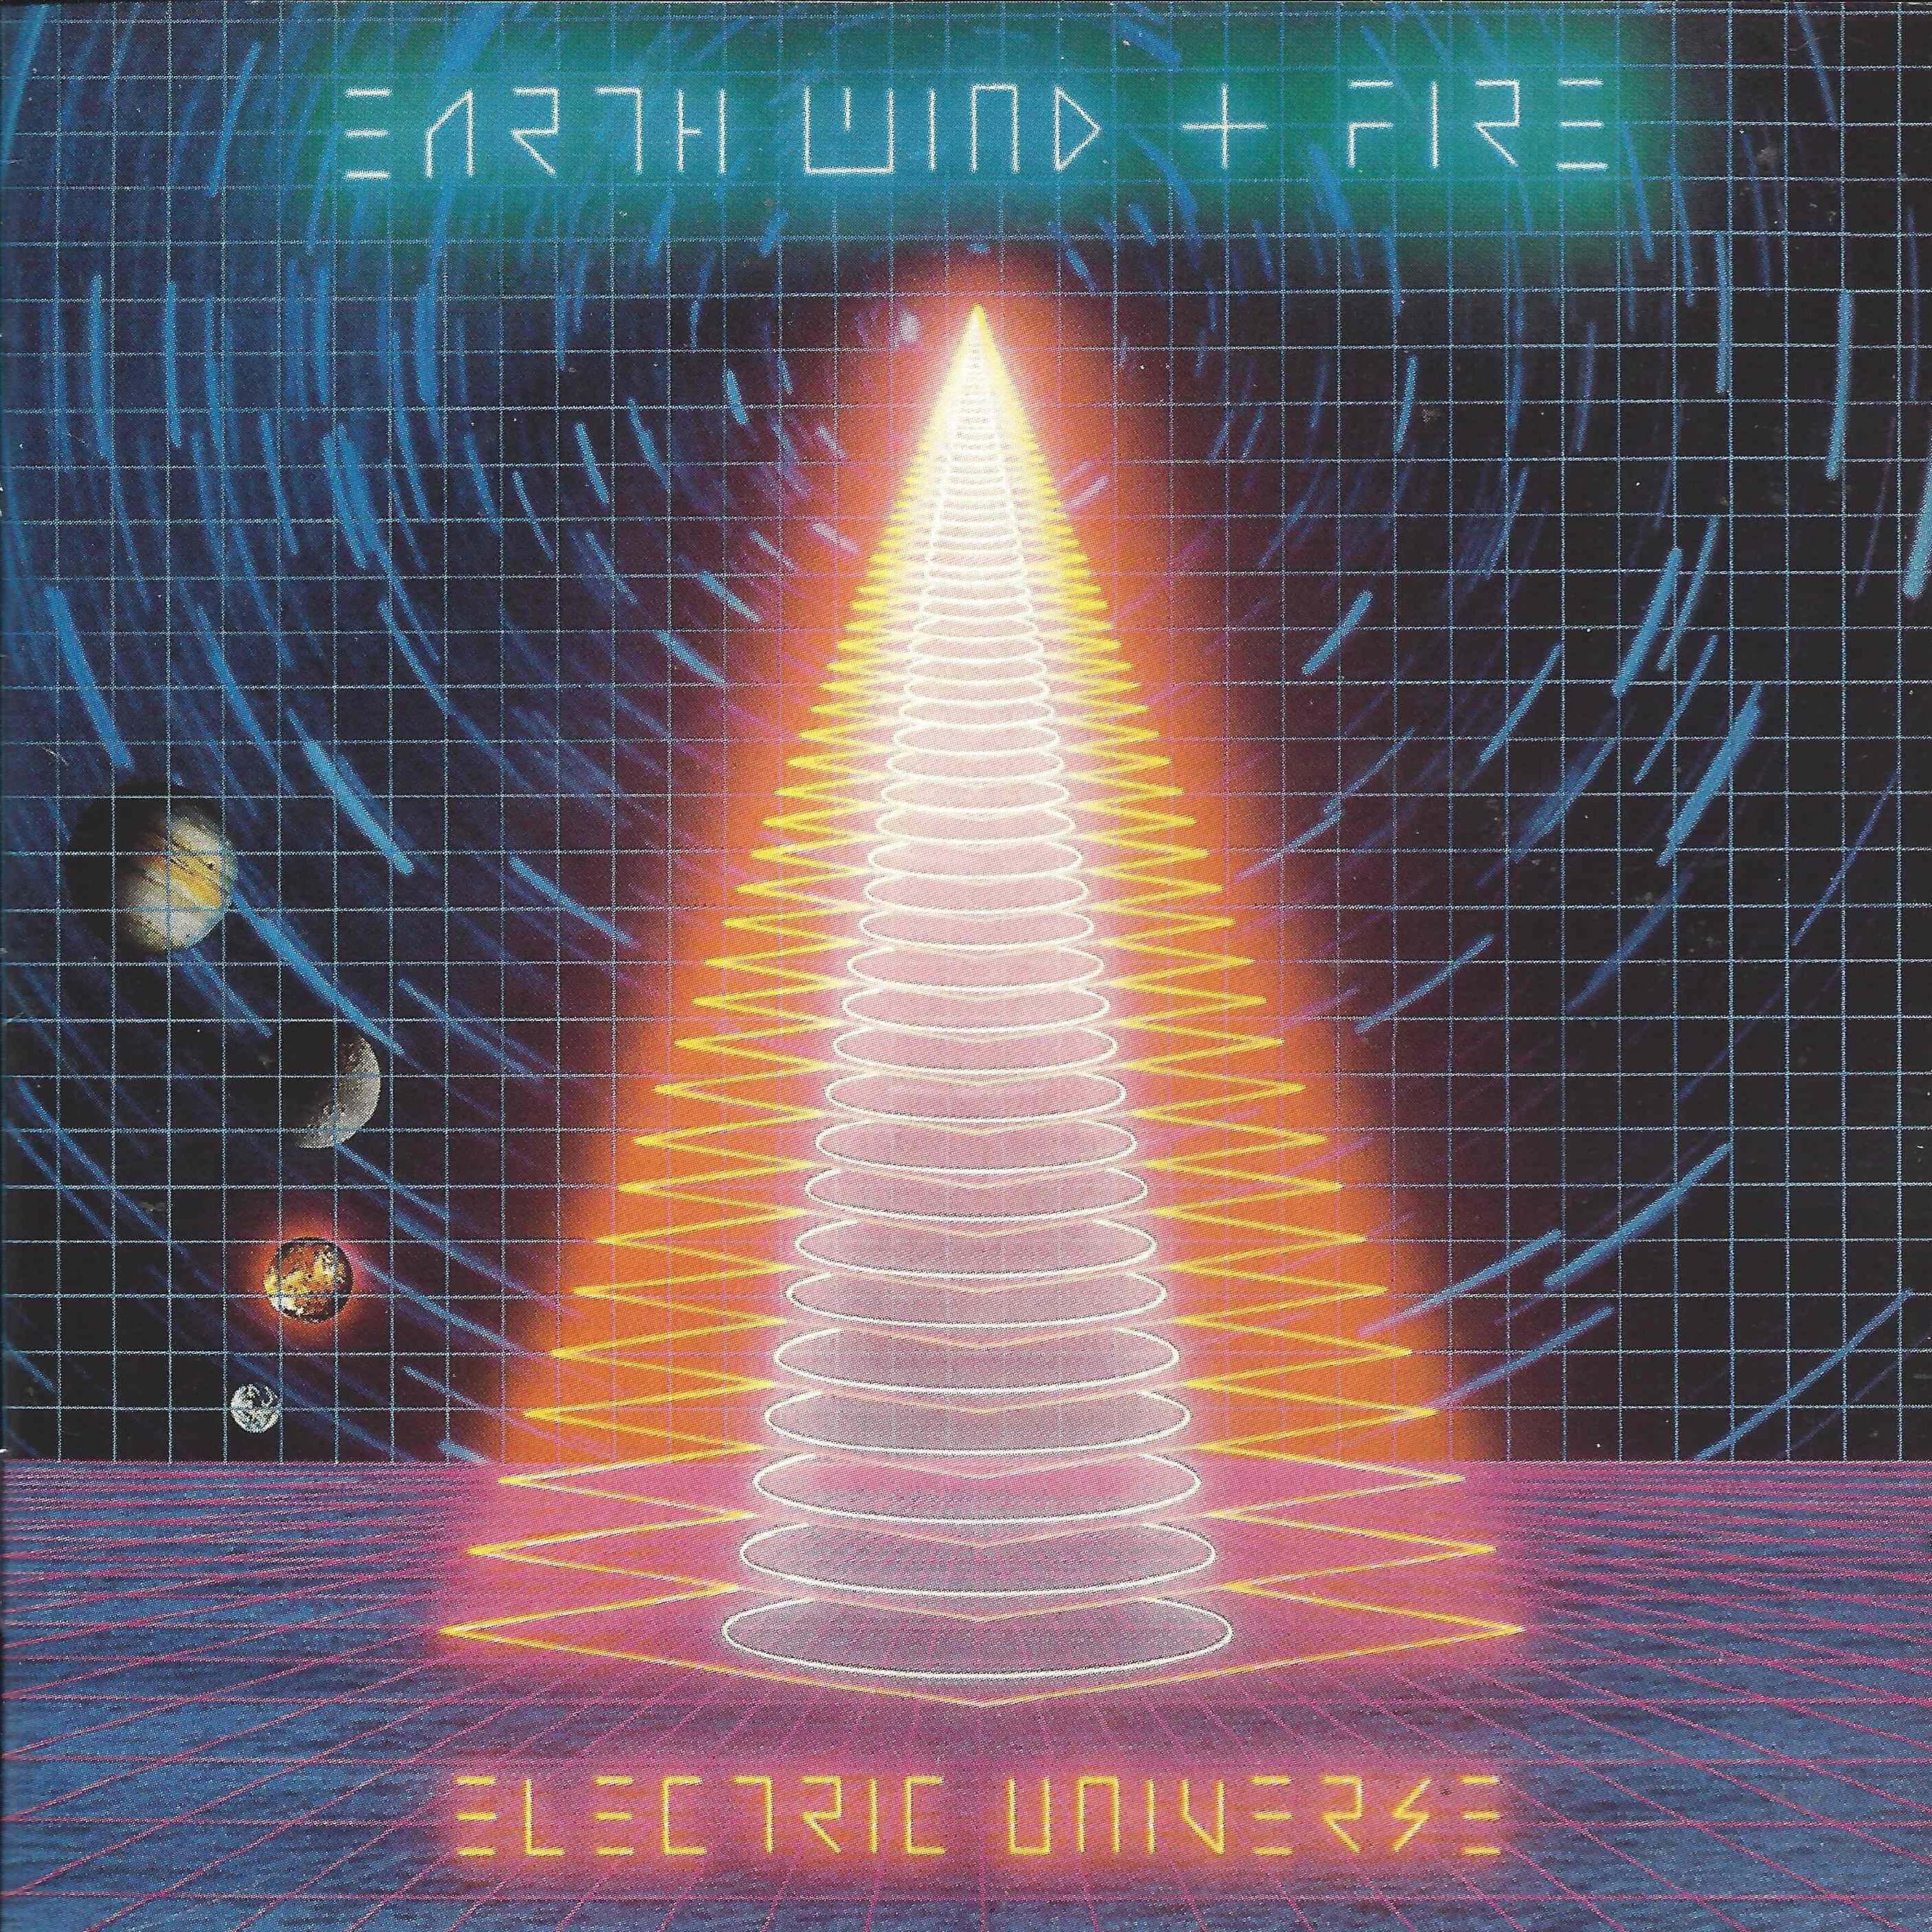 Earth, Wind & Fire ‎– Electric Universe - Dubman Home Entertainment